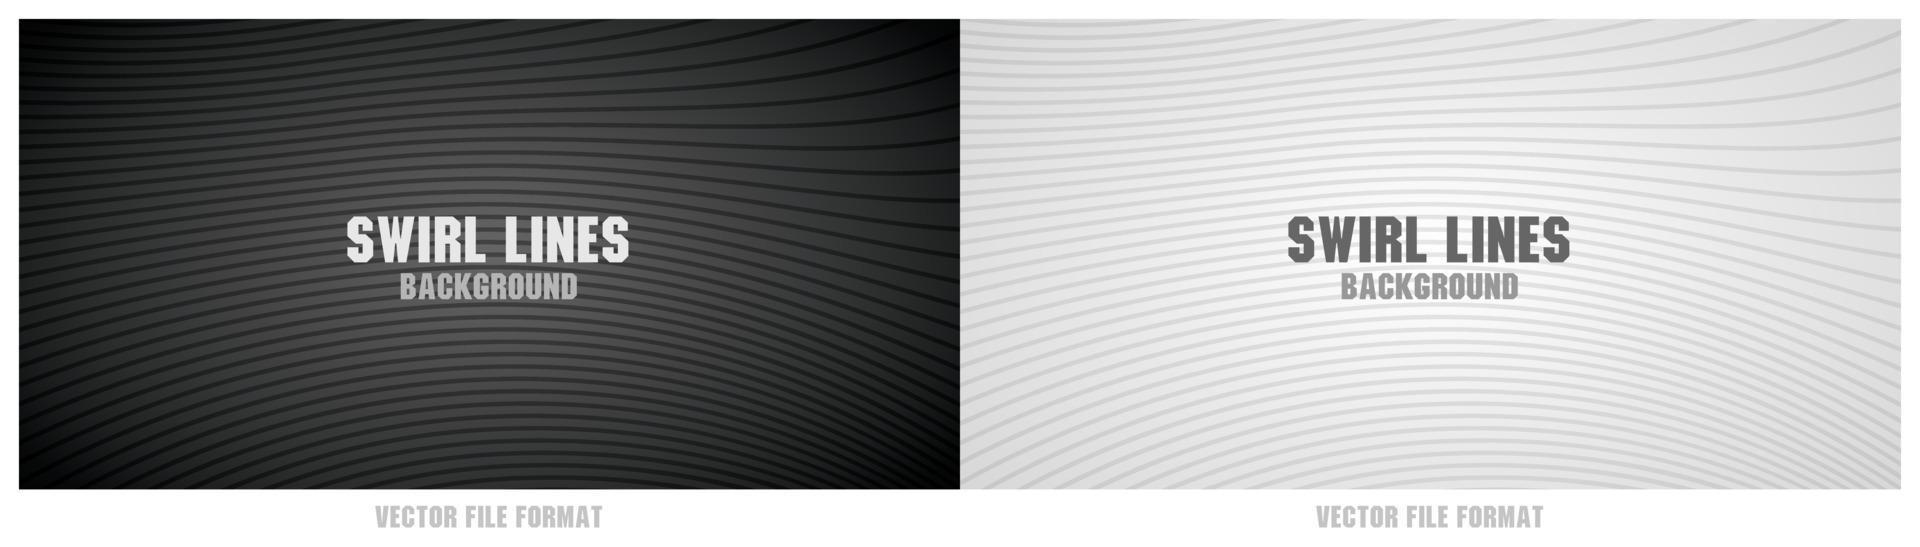 cool minimal swirl line pattern black graphic background vector